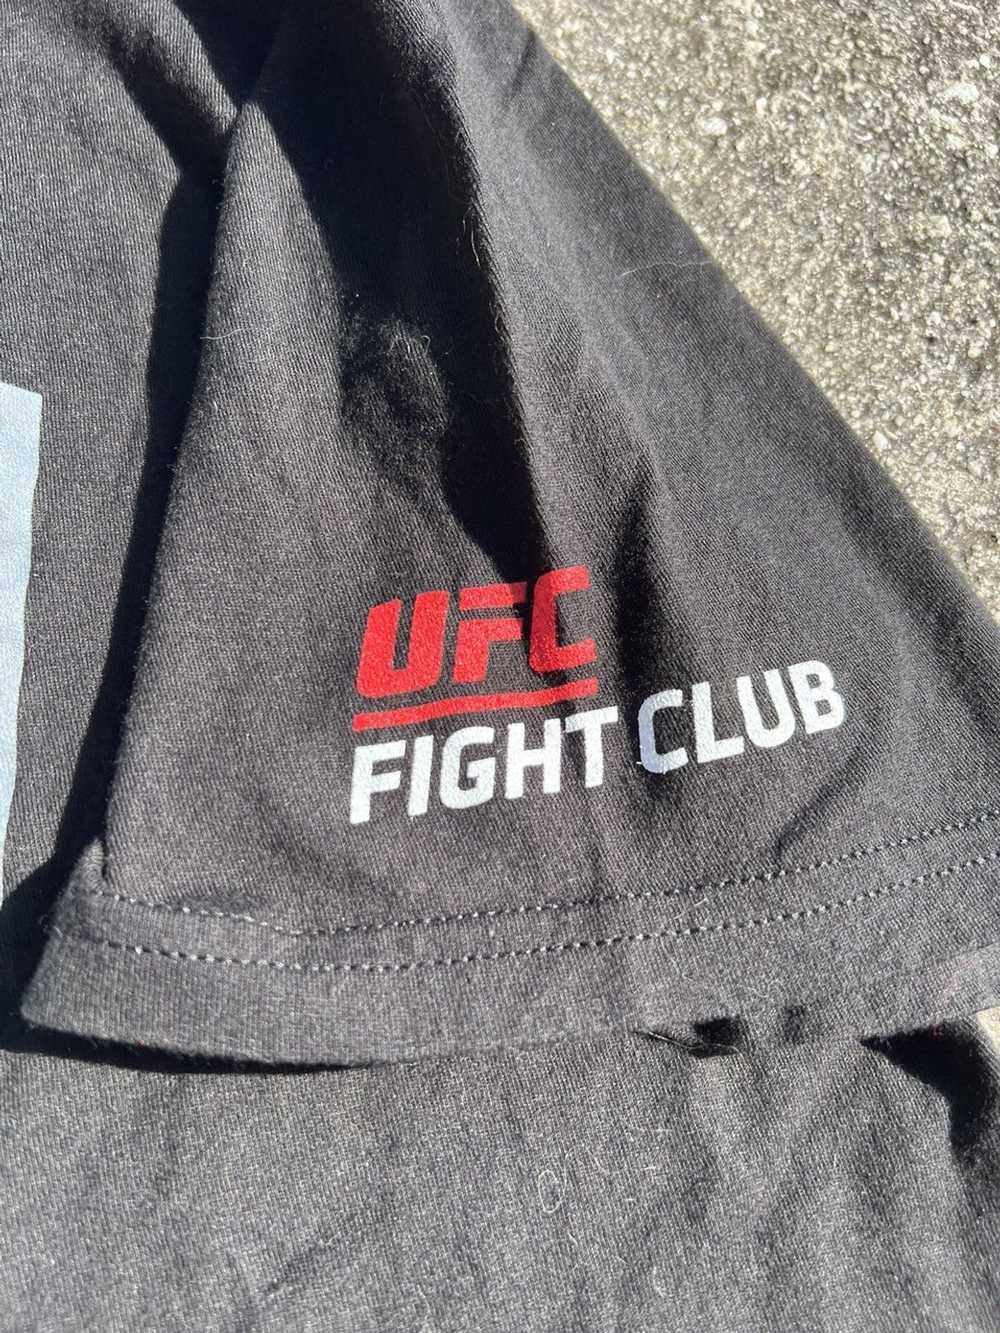 Ufc UFC Fight Club tee - image 3